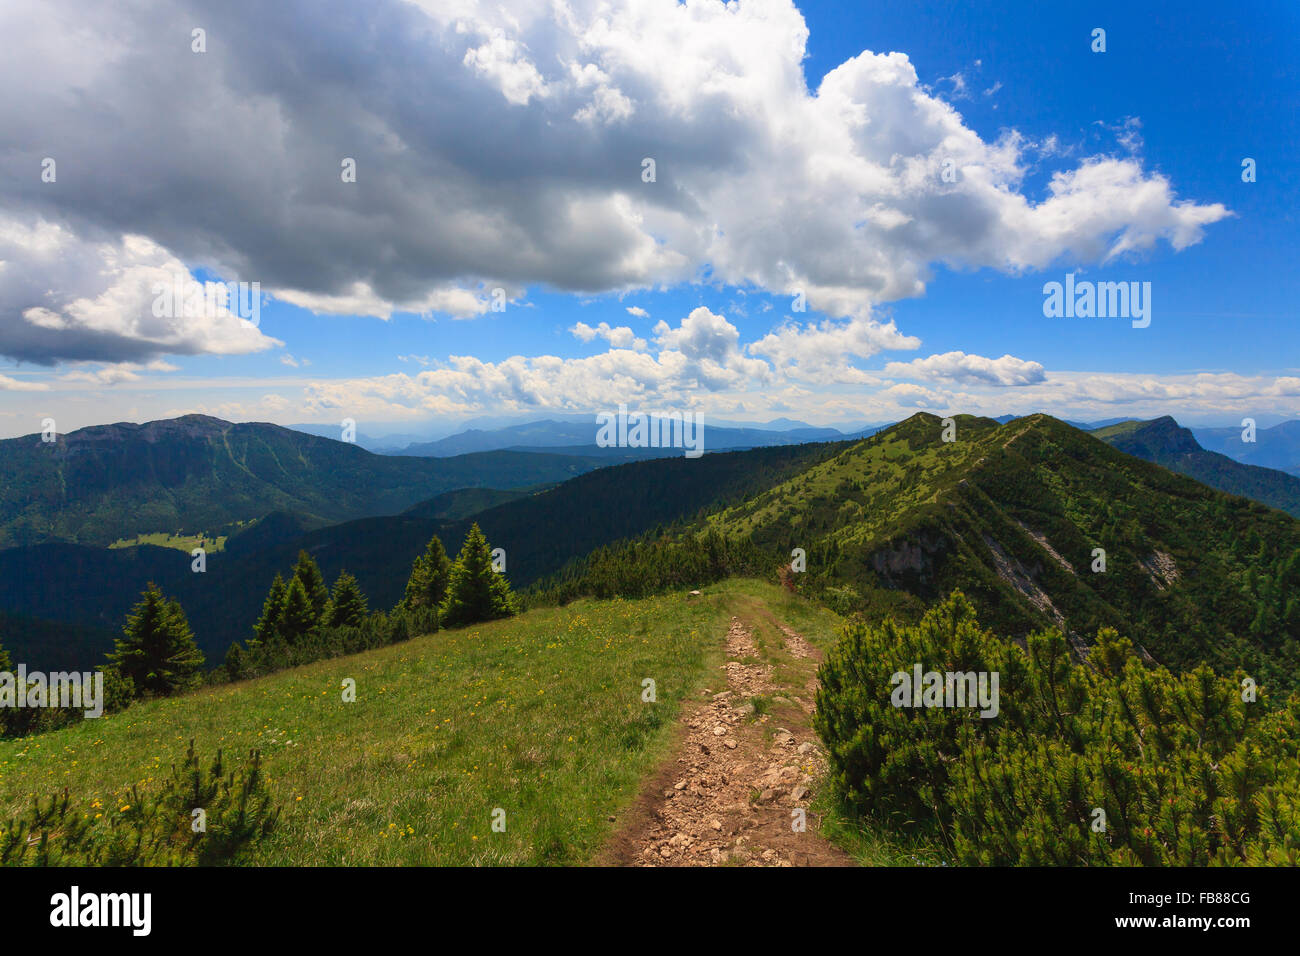 Panorama from Italian alps, mugo pines along a mountain trekking path Stock Photo